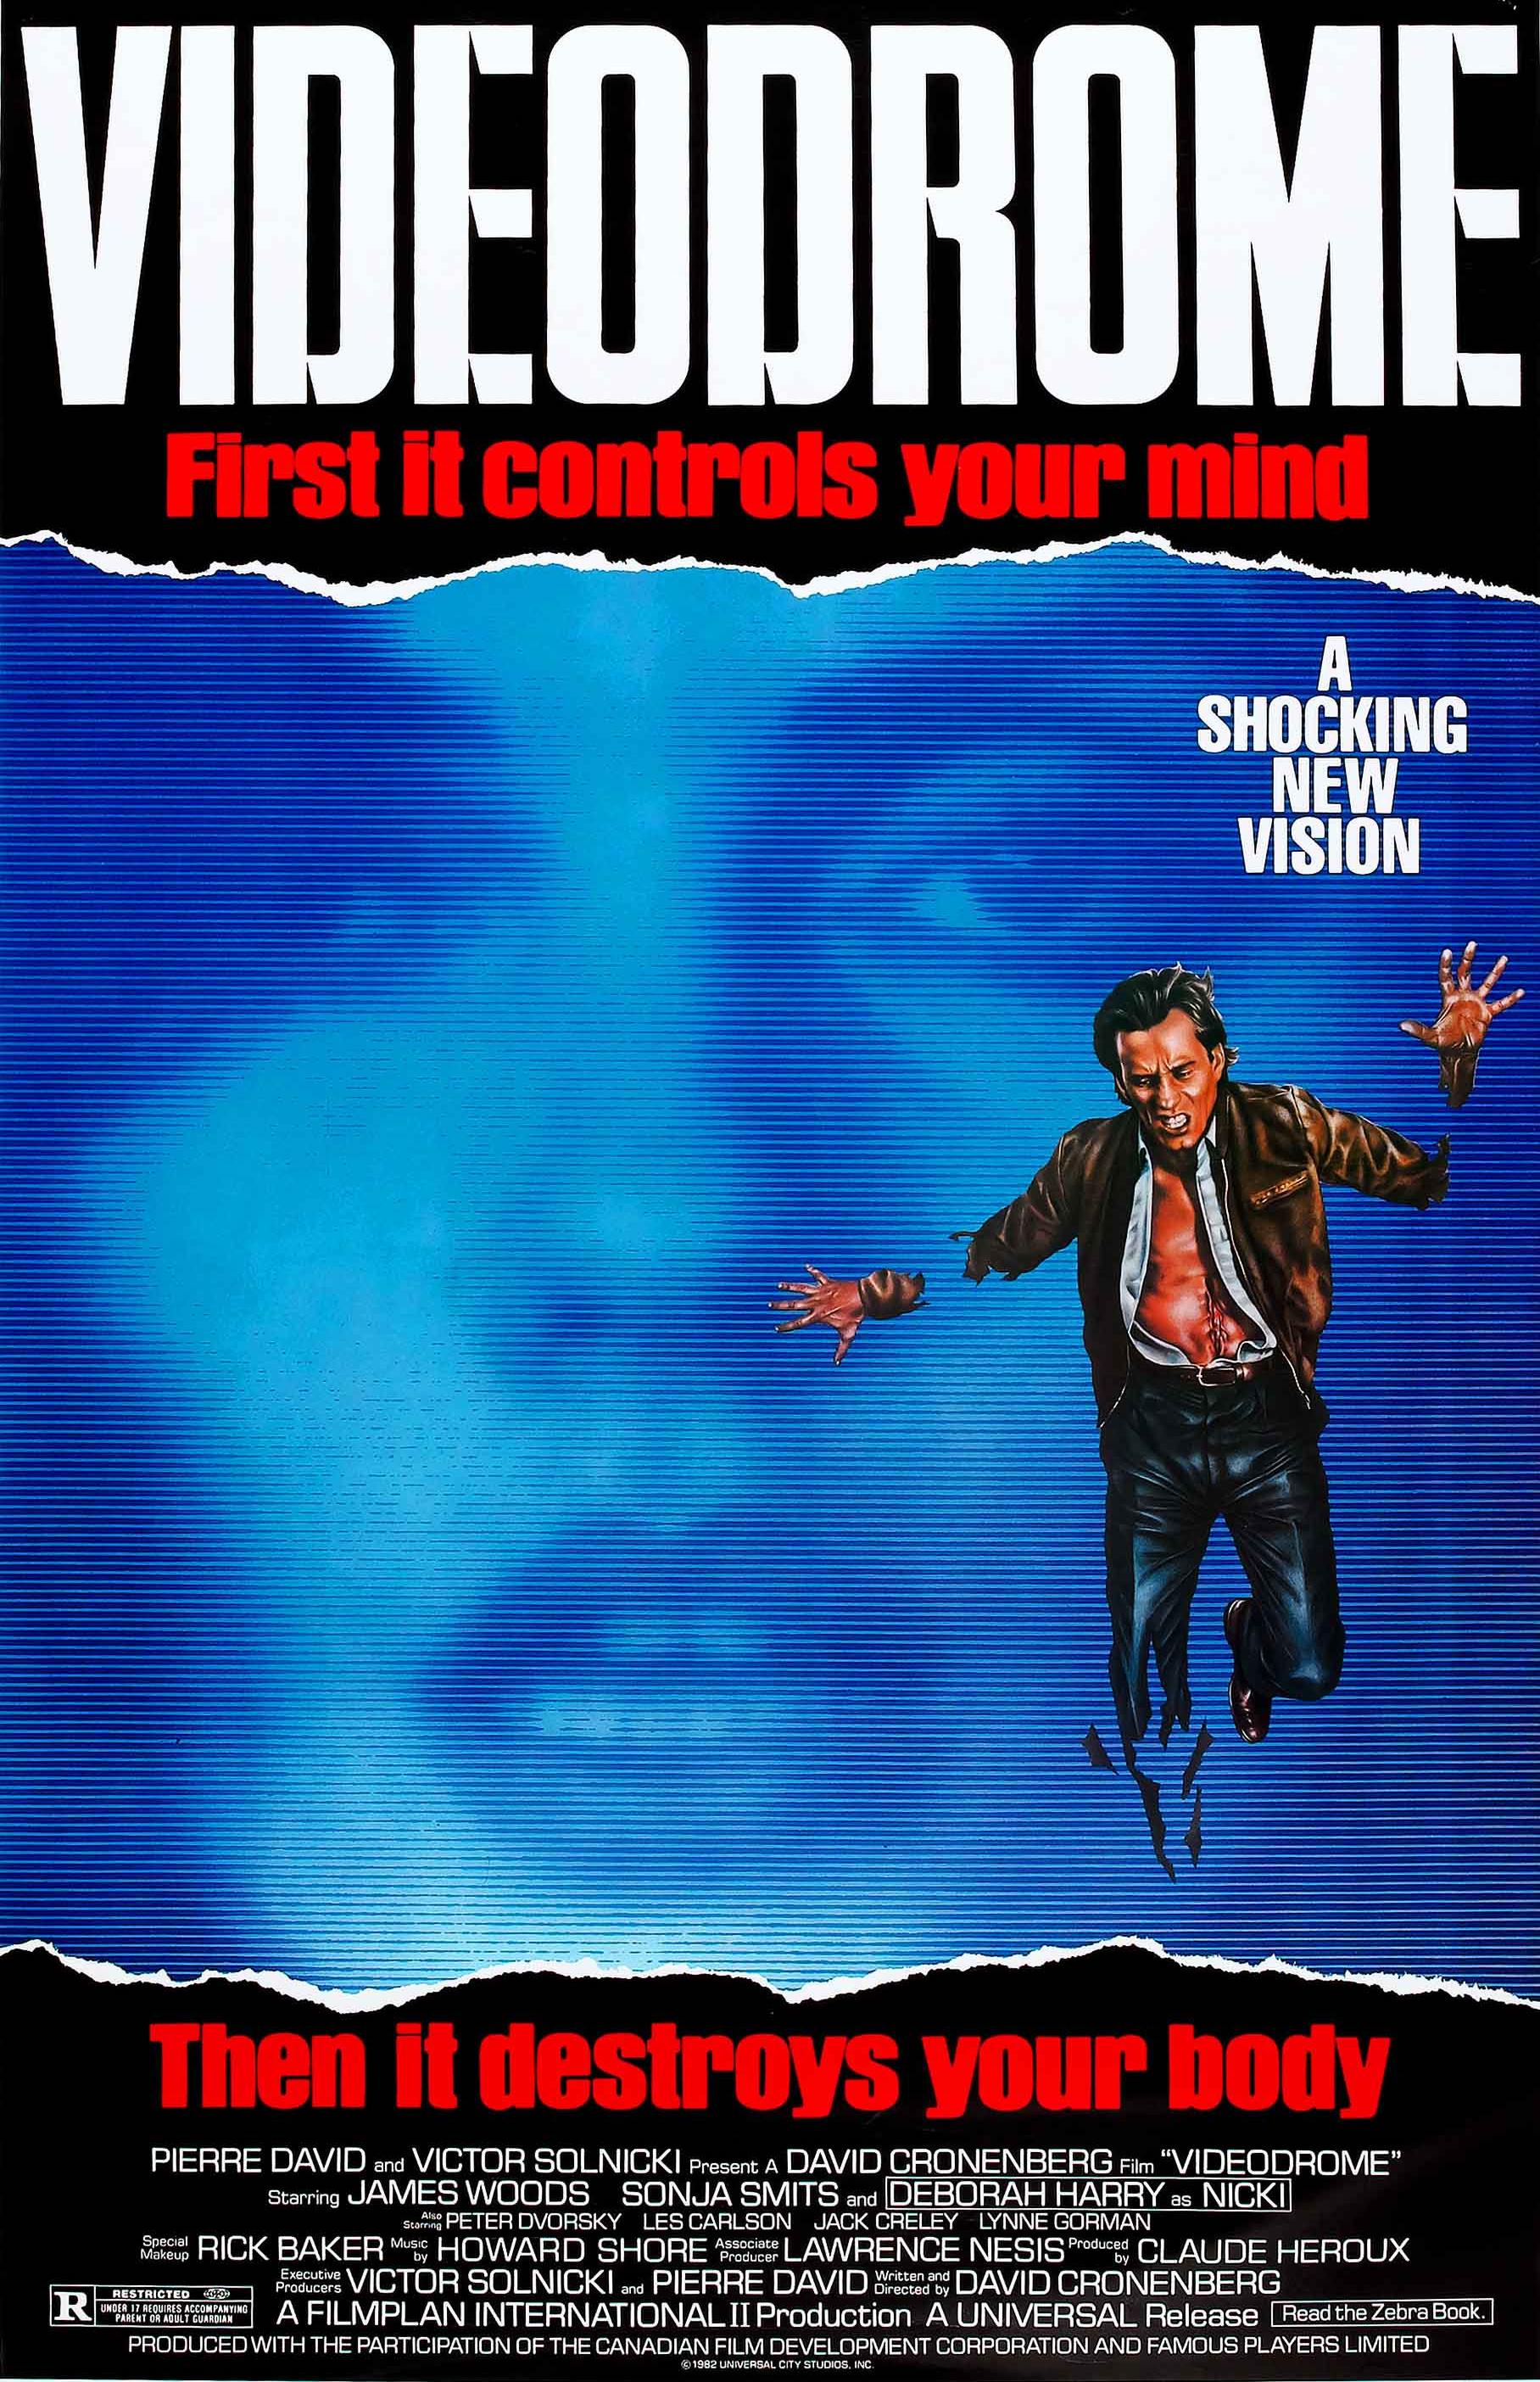 Film poster for David Cronenberg